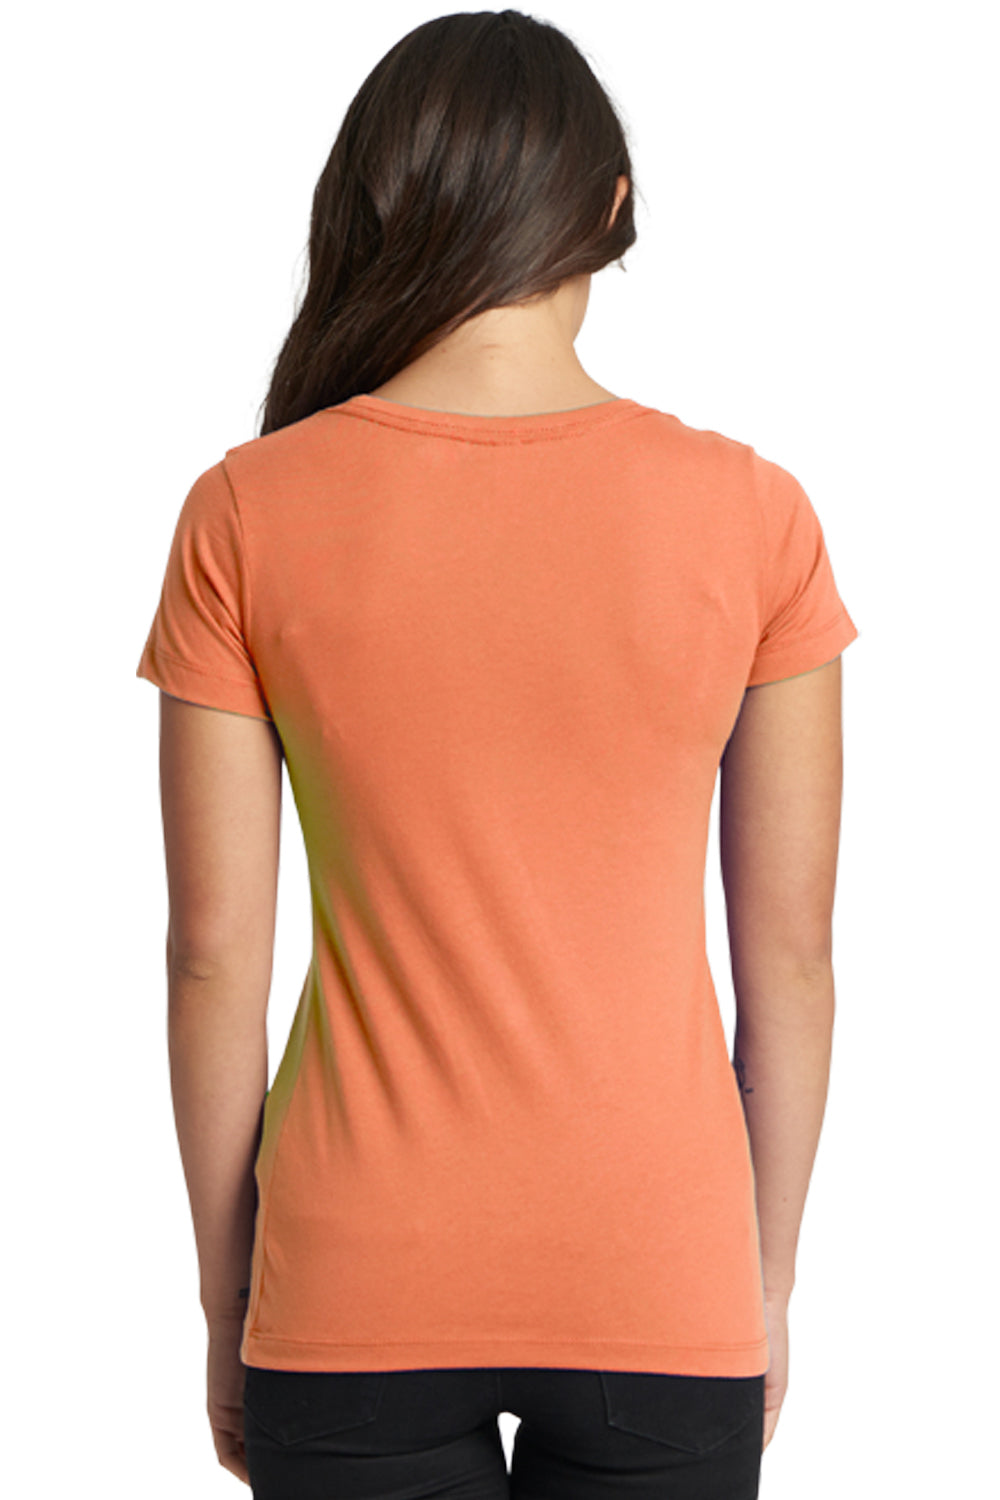 Next Level N1510 Womens Ideal Jersey Short Sleeve Crewneck T-Shirt Light Orange Back